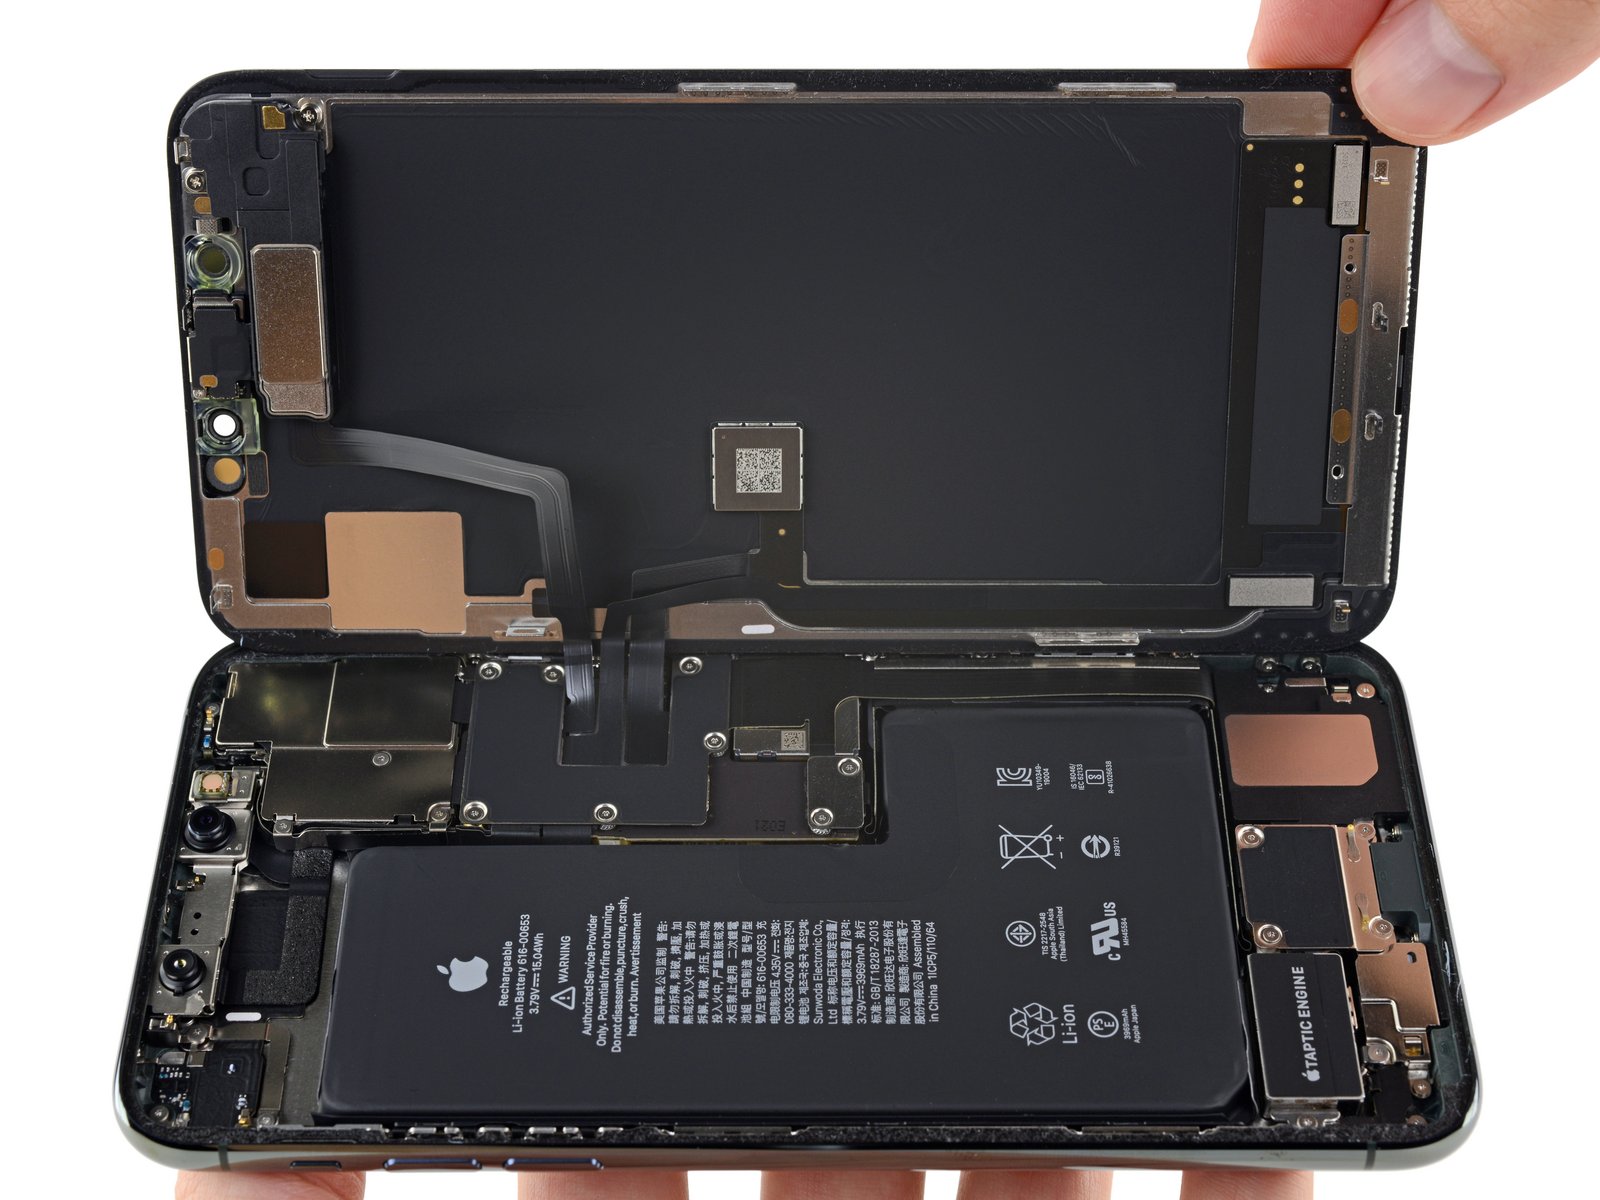 Desmanche do iPhone 11 mostra conector misterioso de bateria e modem da Intel